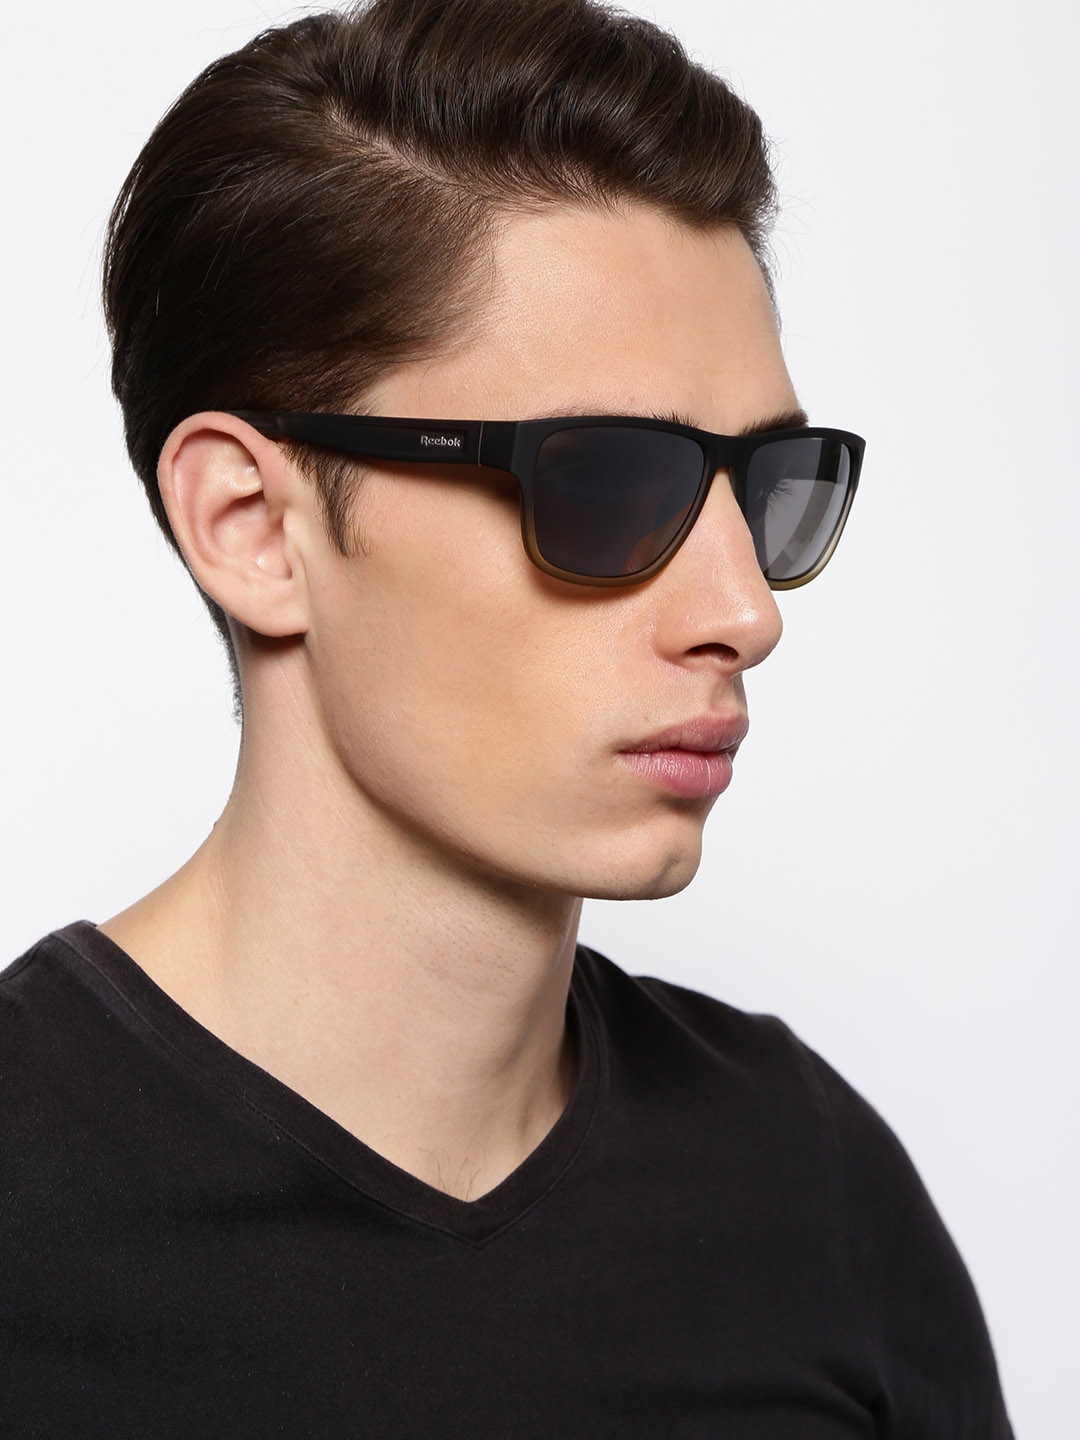 Buy Reebok Unisex Wayfarer Sunglasses 